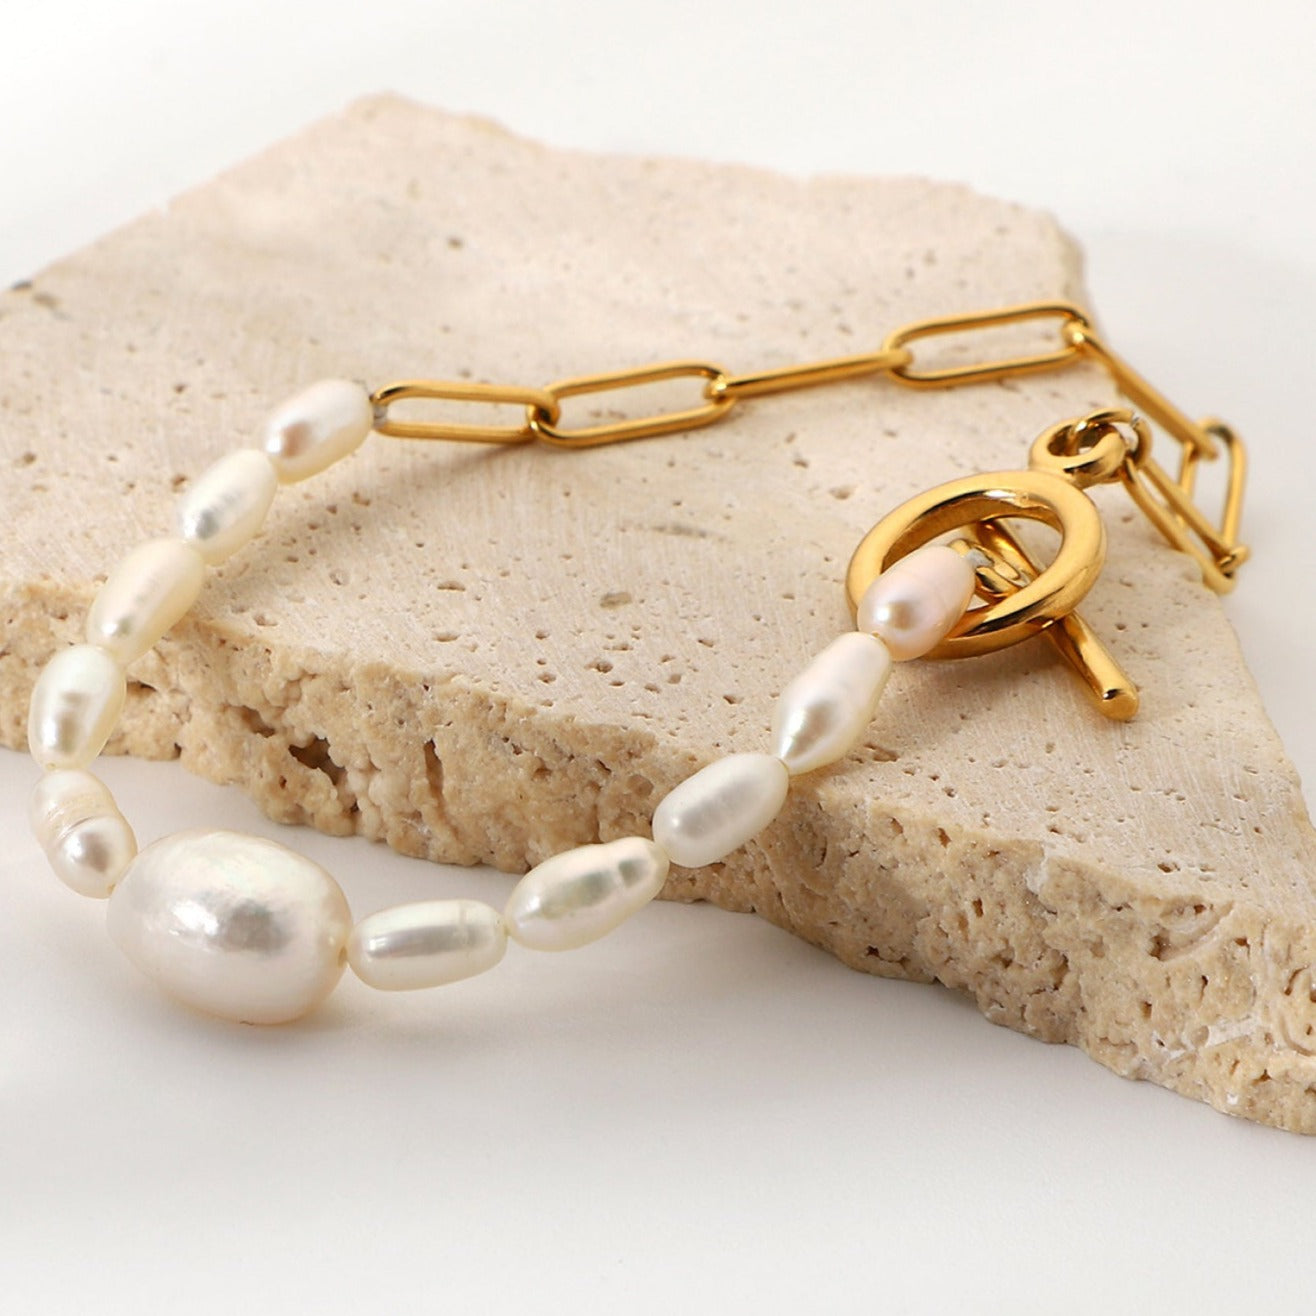 Mason & Madison Half Chain Pearl Necklace